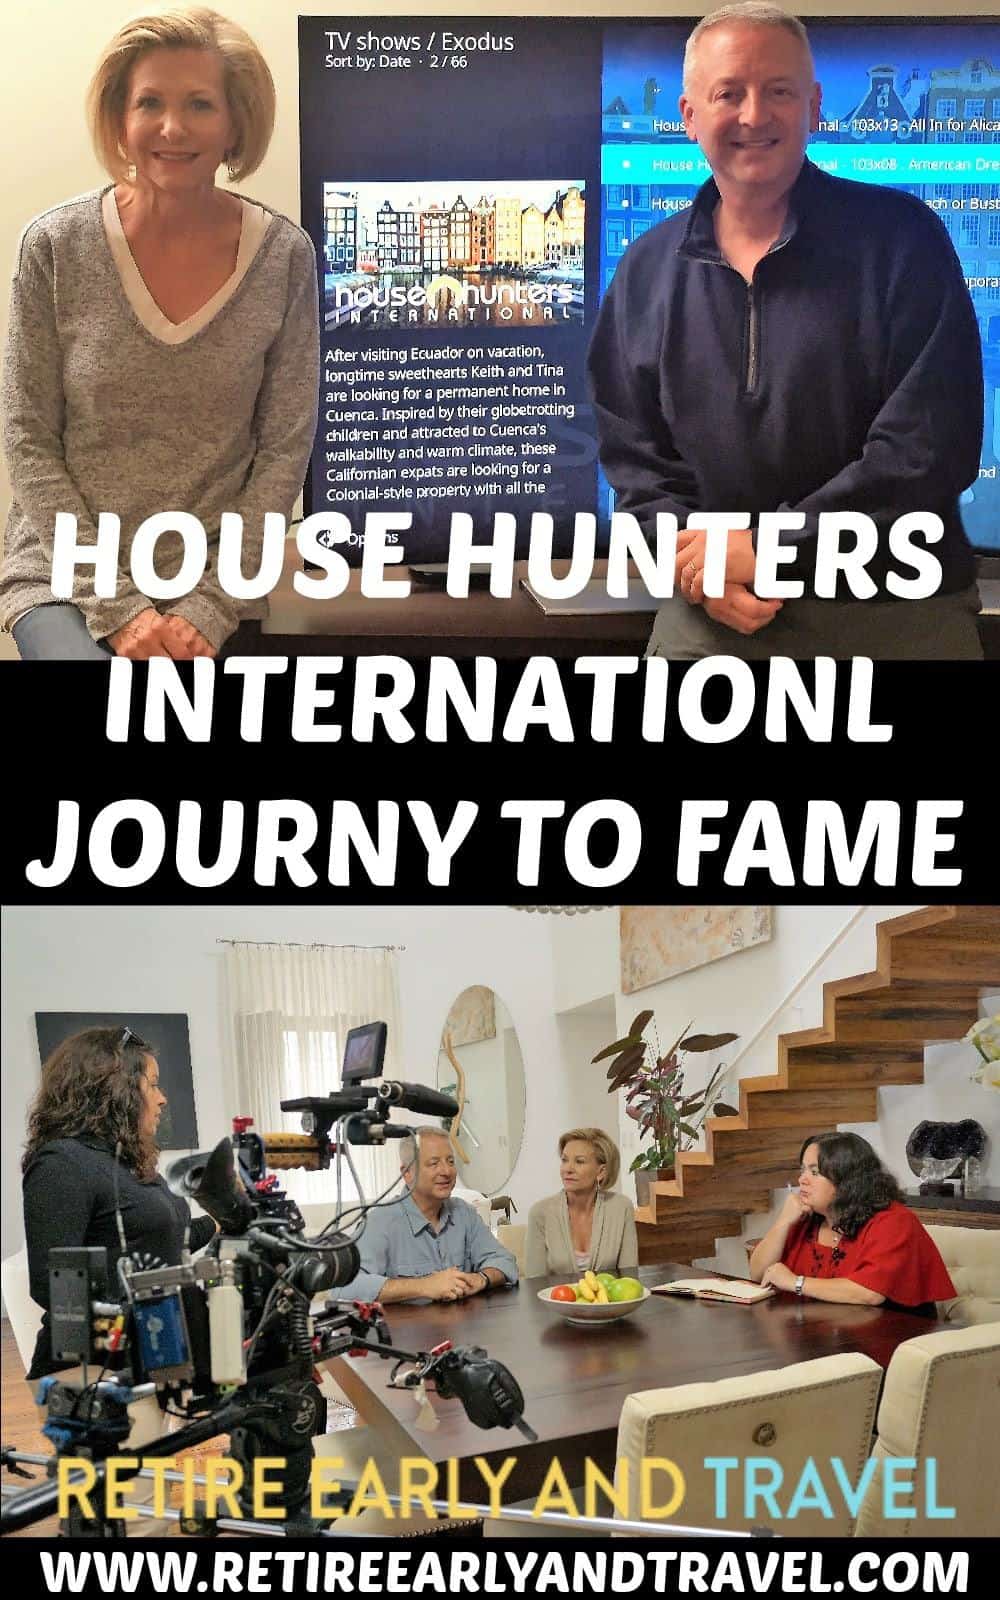 house hunters international